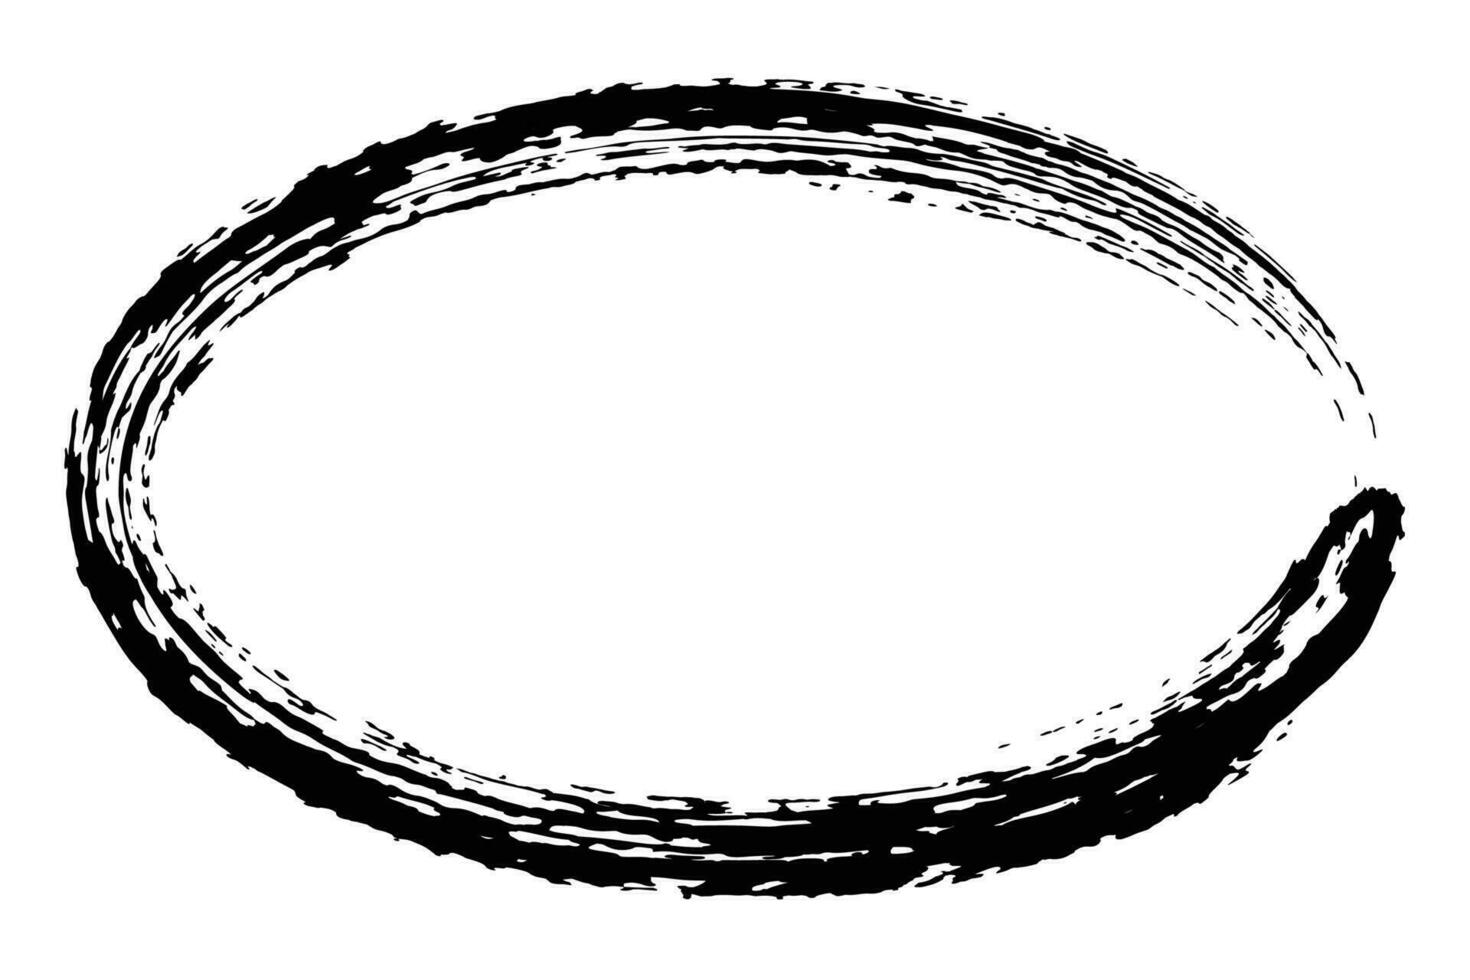 Ellipse frame form, grunge design element with distress texture. Black brush stroke. Vector illustration isolated on white background.